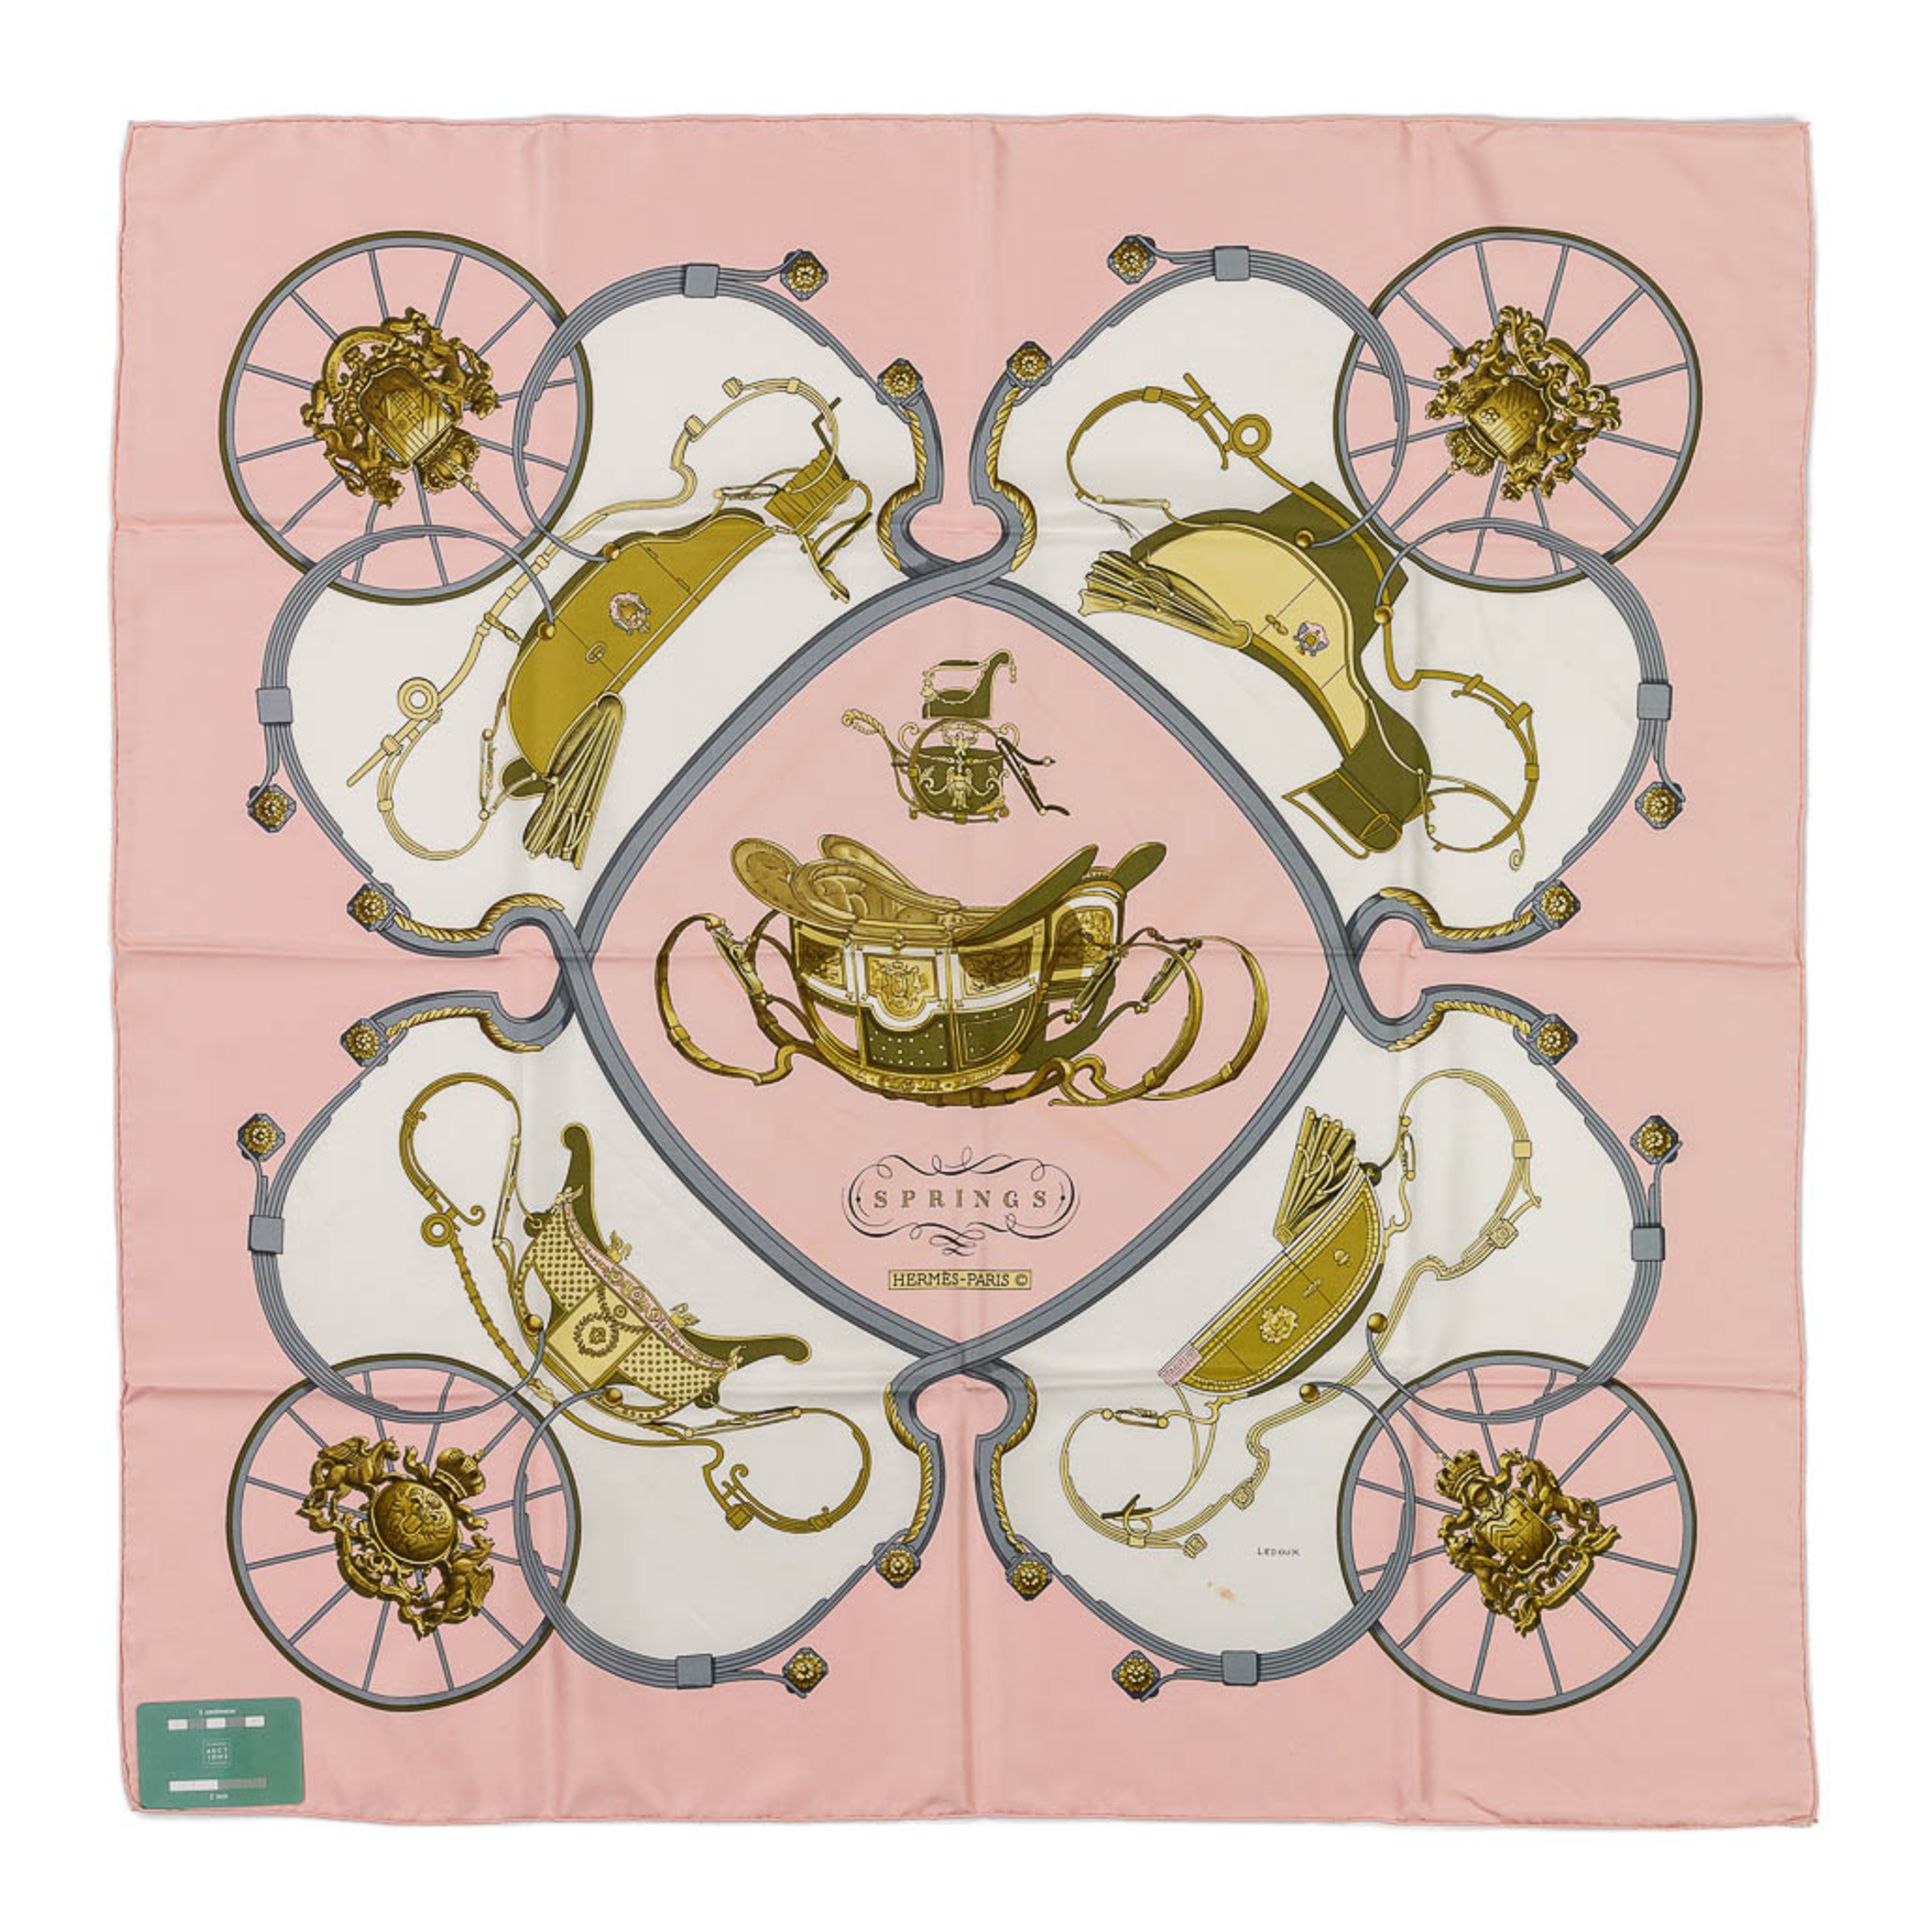 Hermès Paris, a silk scarf, 'Spring'. (L: 88 x W: 88 cm) - Image 2 of 17